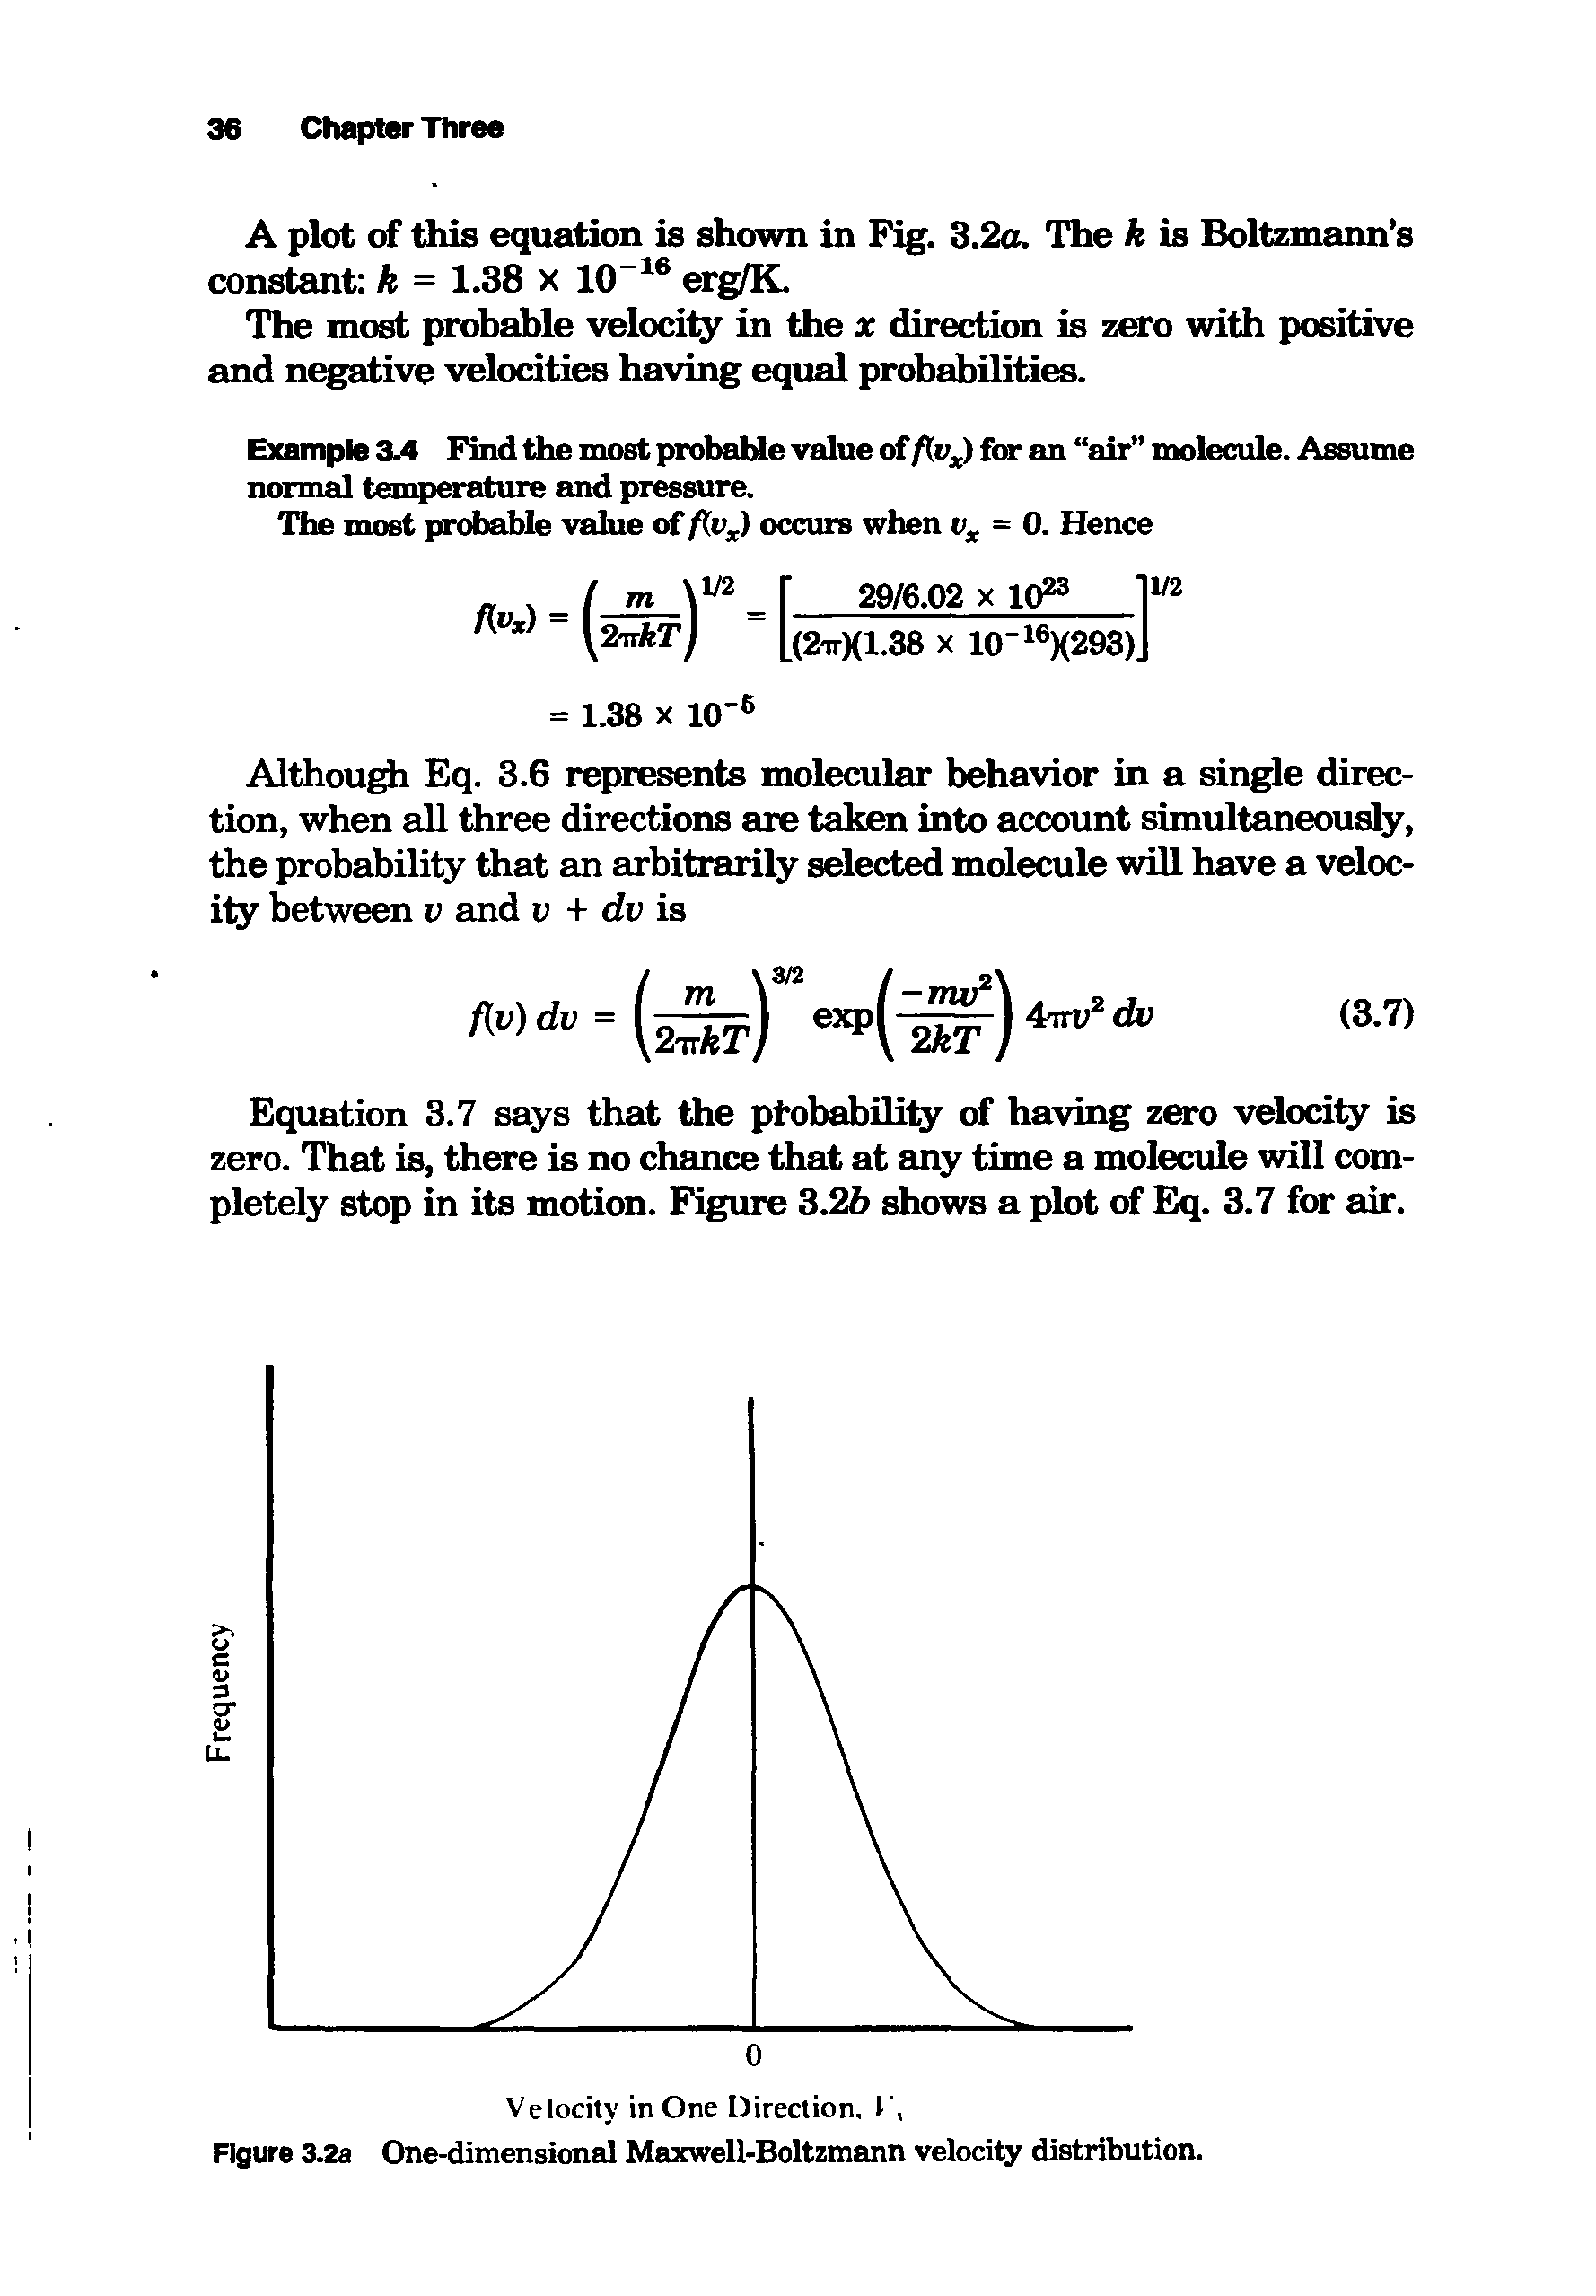 Figure 3.2a One-dimensional Maxwell-Boltzmann velocity distribution.